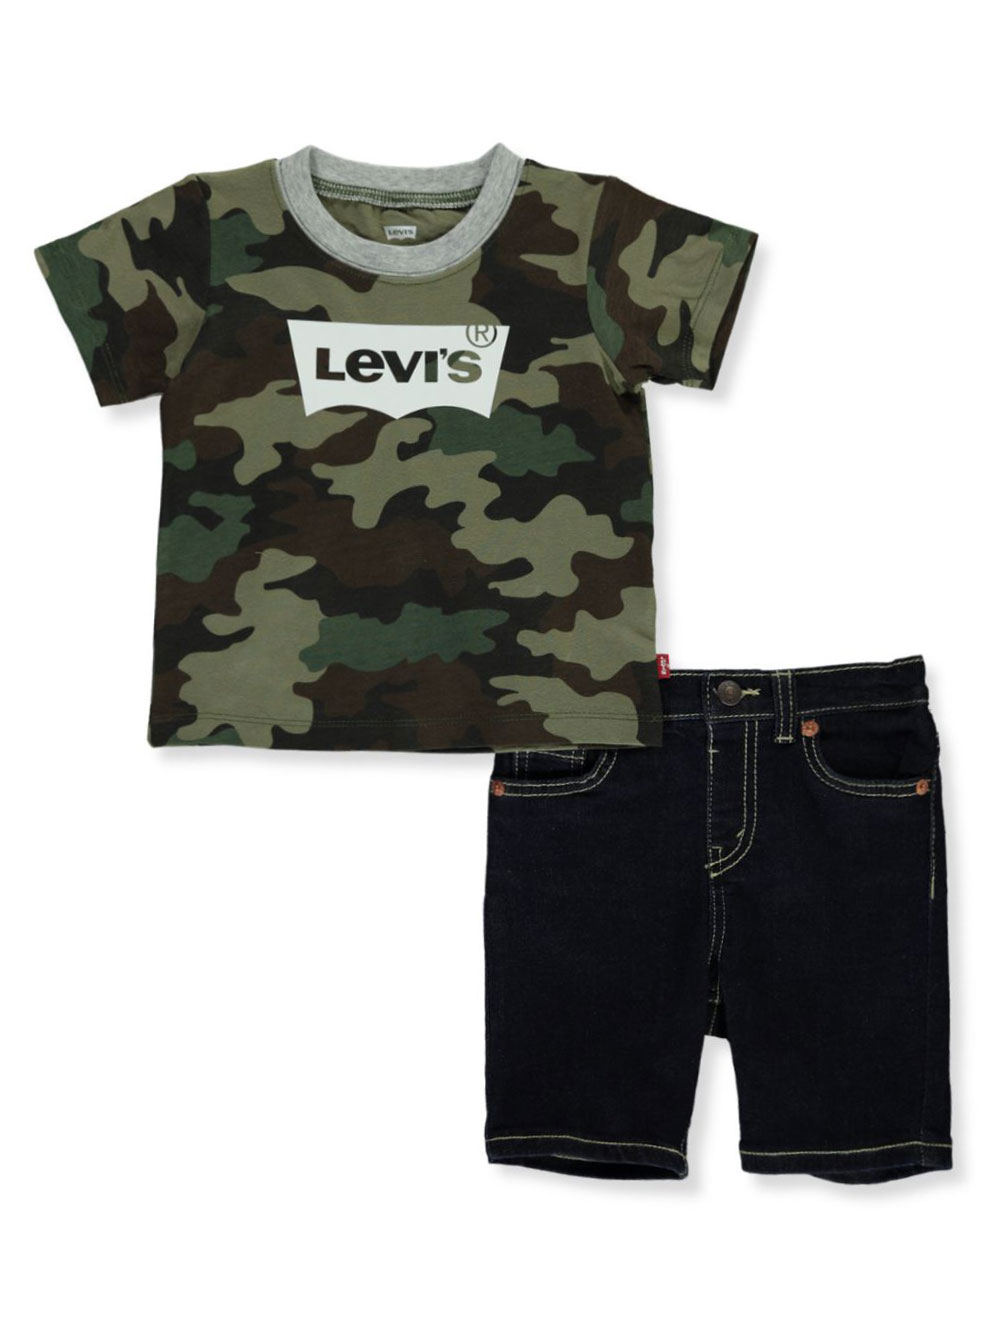 levi's baby boy clothes